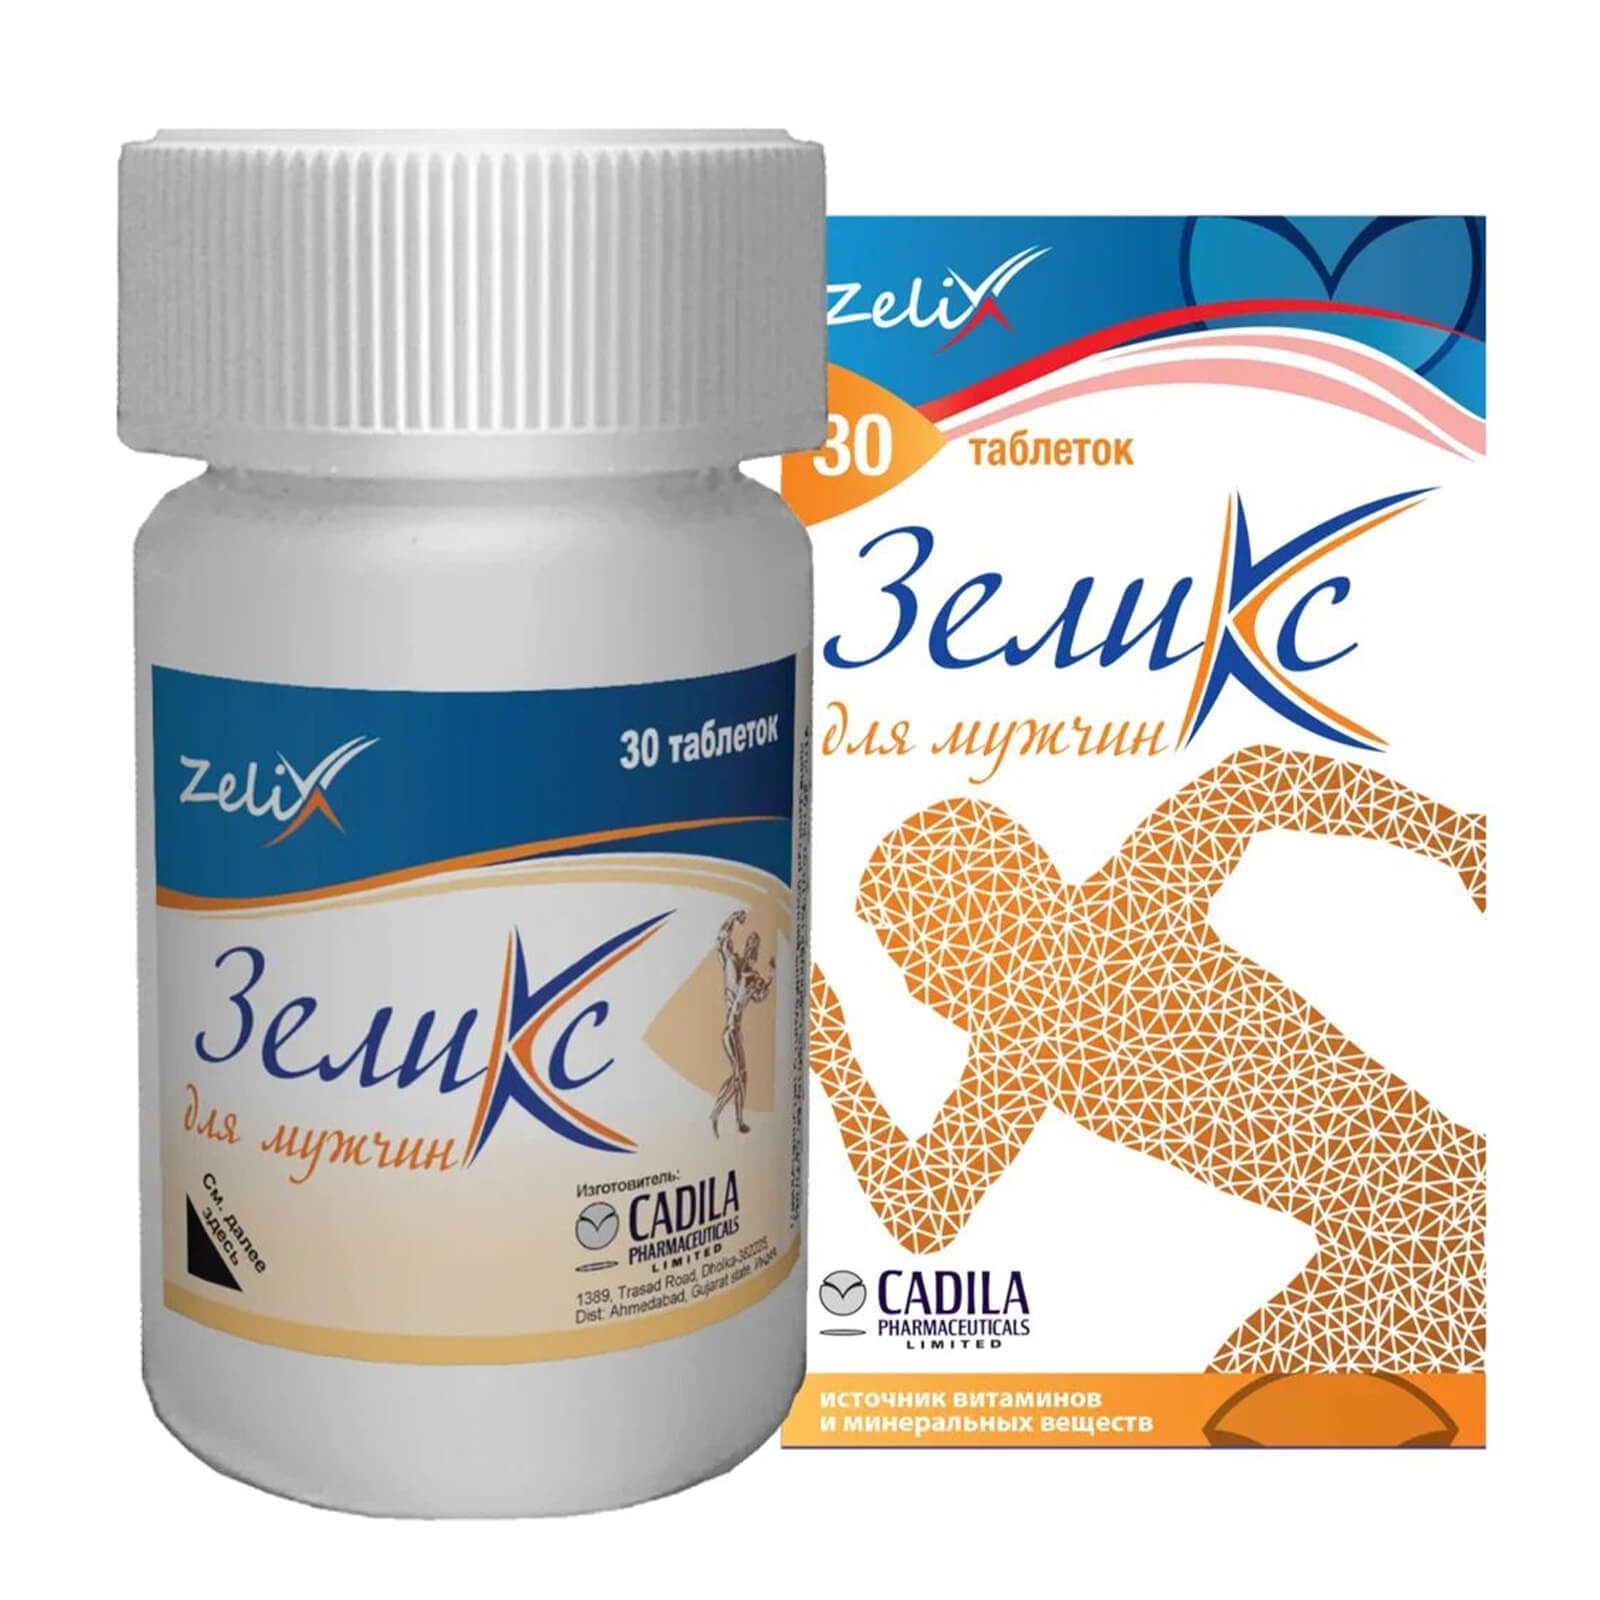 Зеликс для мужчин, 30 таблеток, Cadila Pharmaceuticals Limited